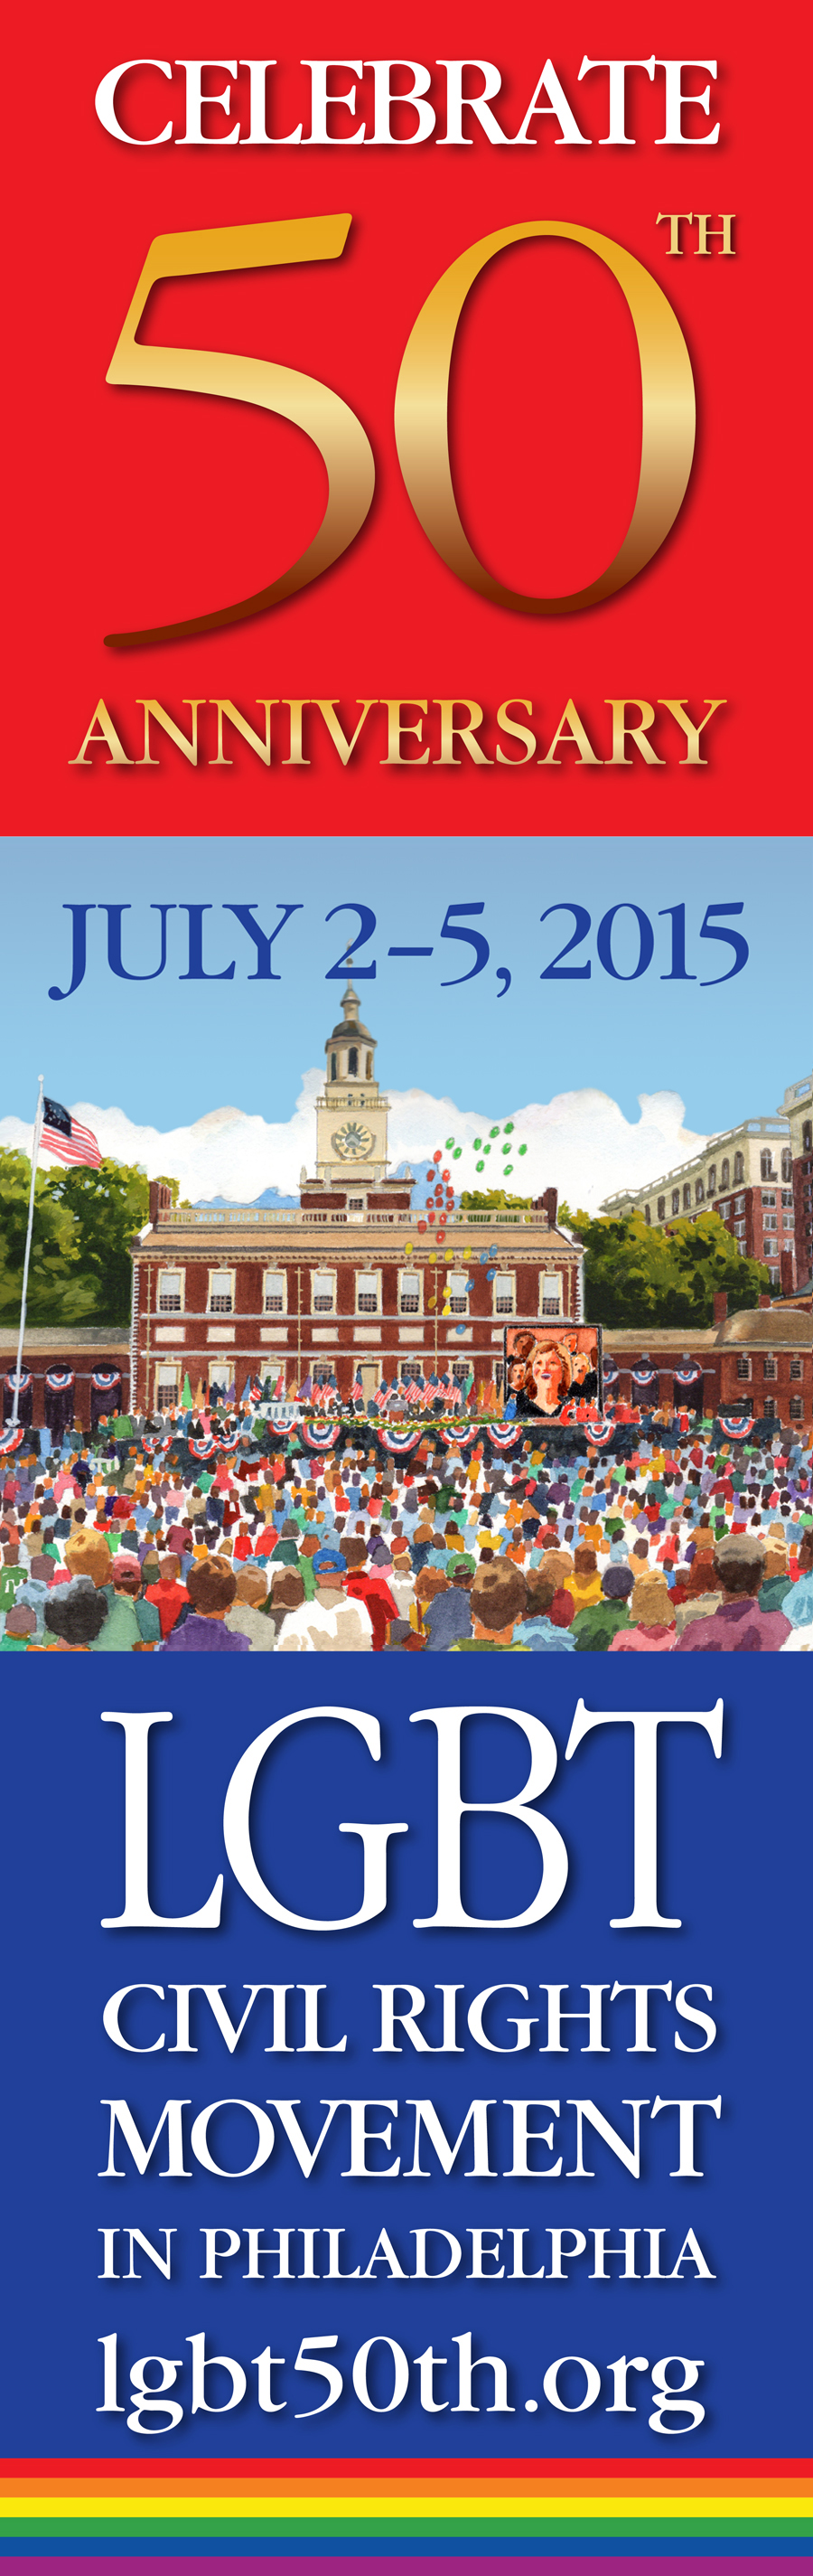 LGBT50th Anniversary Celebration July 4, 2015 Philadelphia